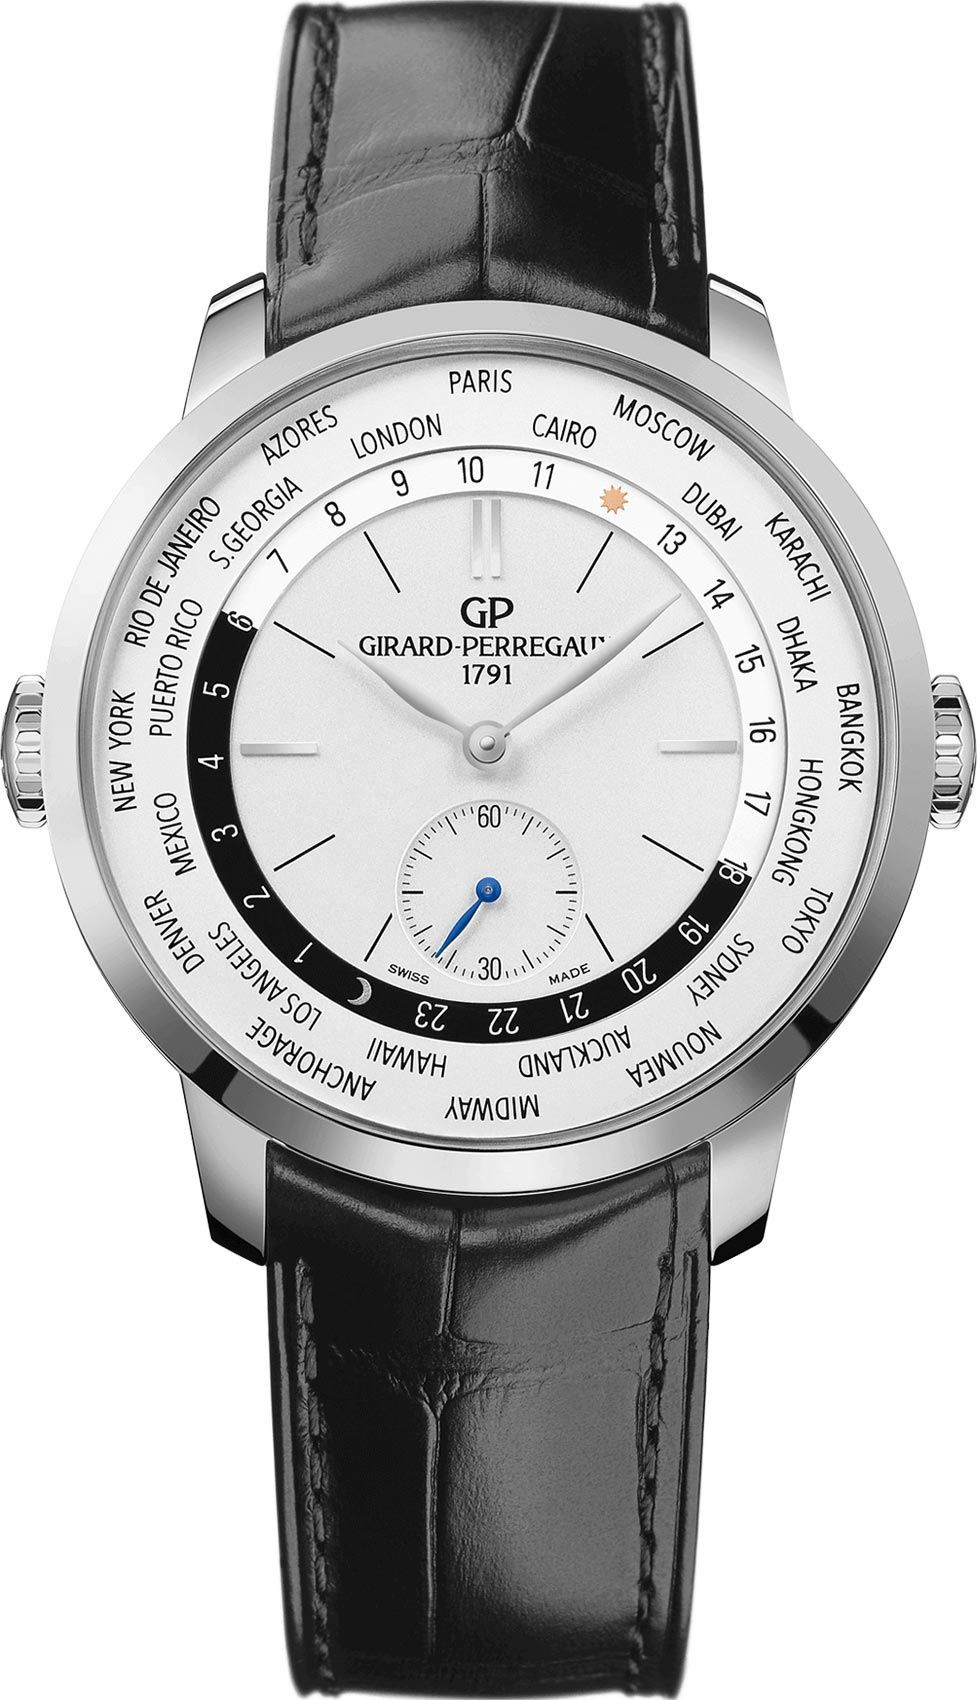 Girard-Perregaux WW.TC 40 mm Watch in Silver Dial For Men - 1